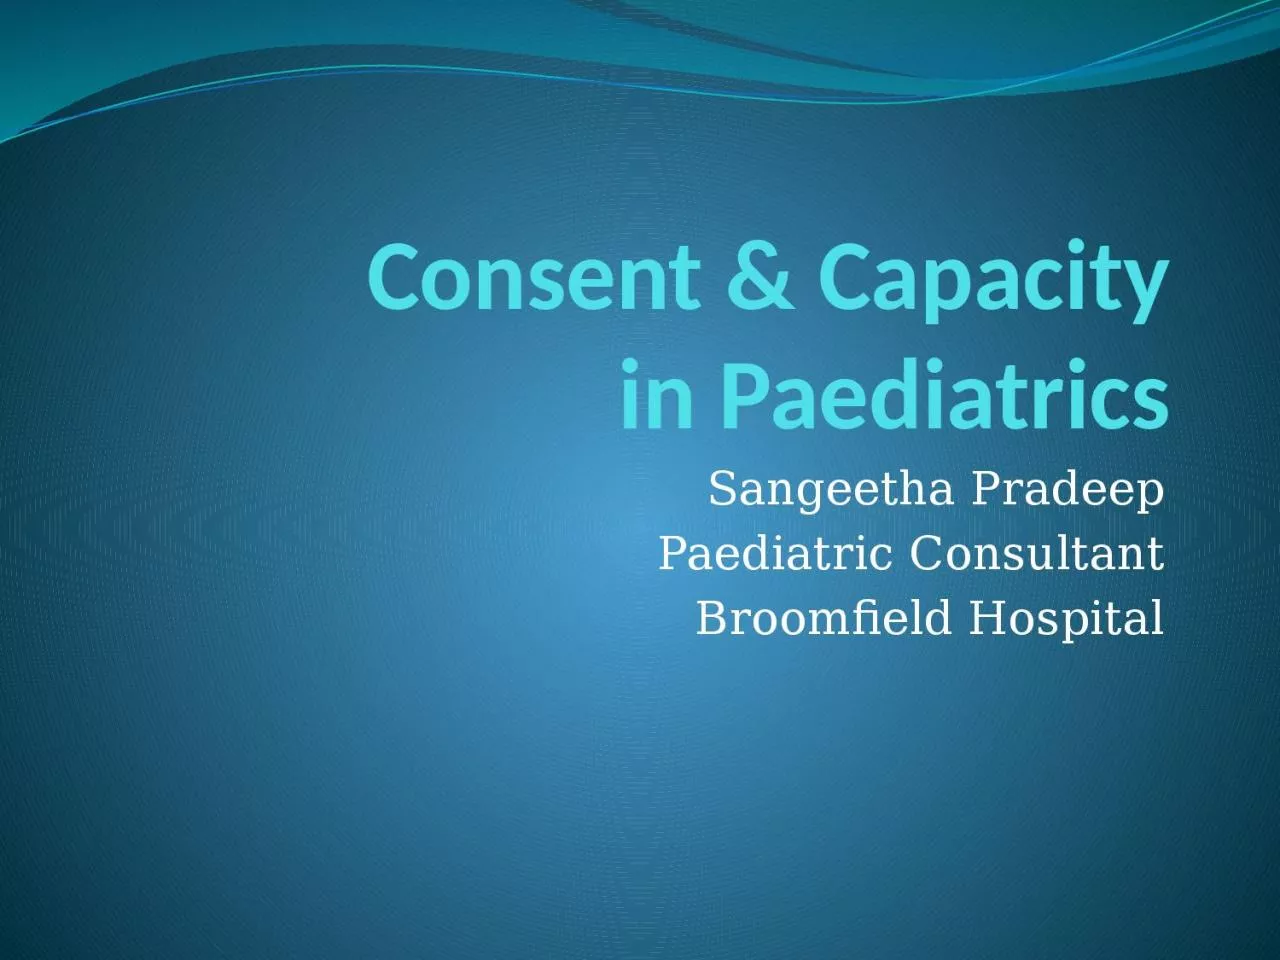 Consent & Capacity in Paediatrics